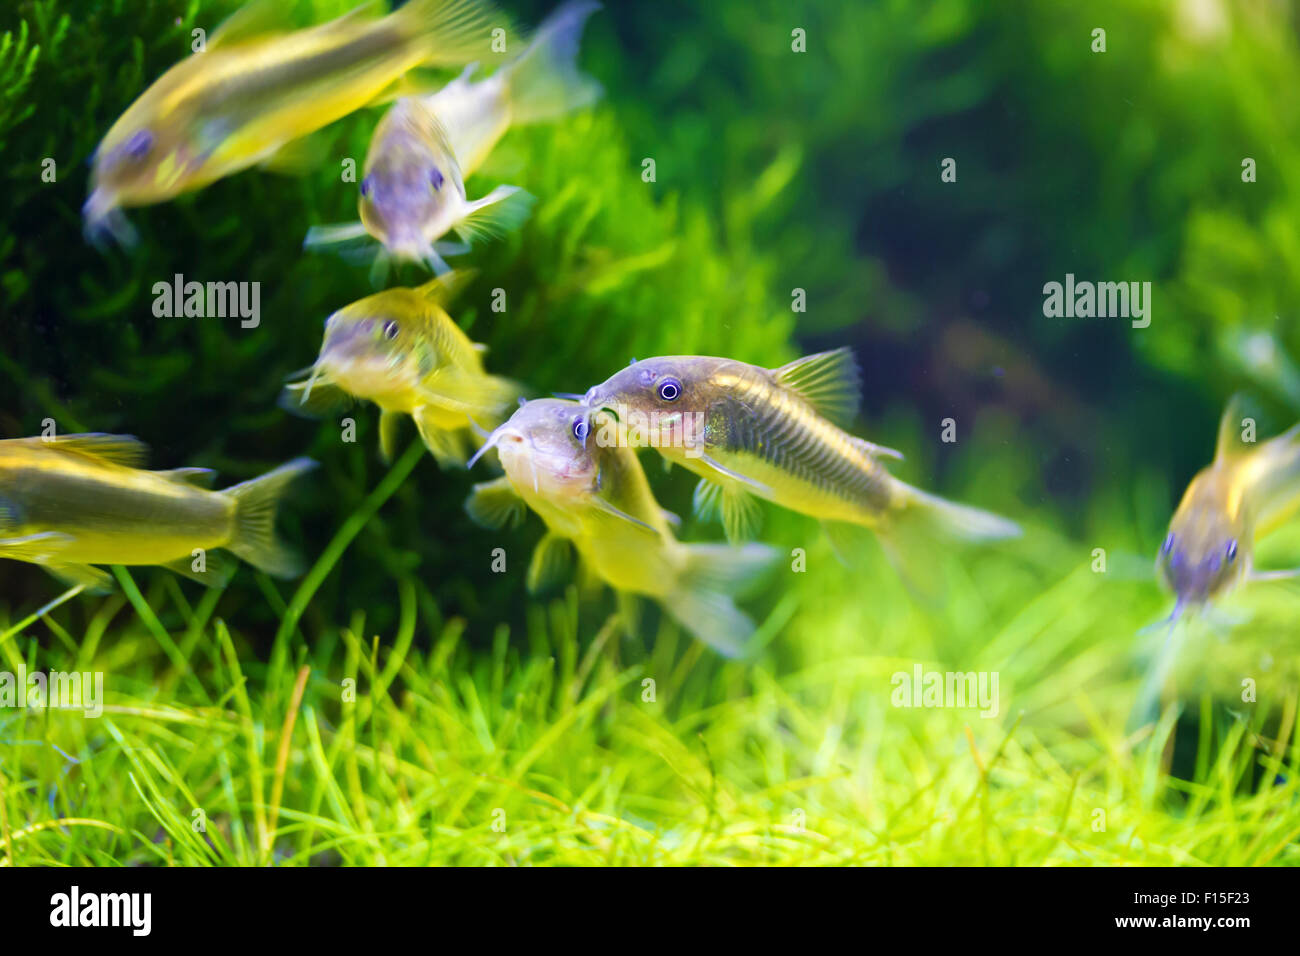 School of Bronze corydoras swimming in aquarium tank,Corydoras aeneus Stock Photo